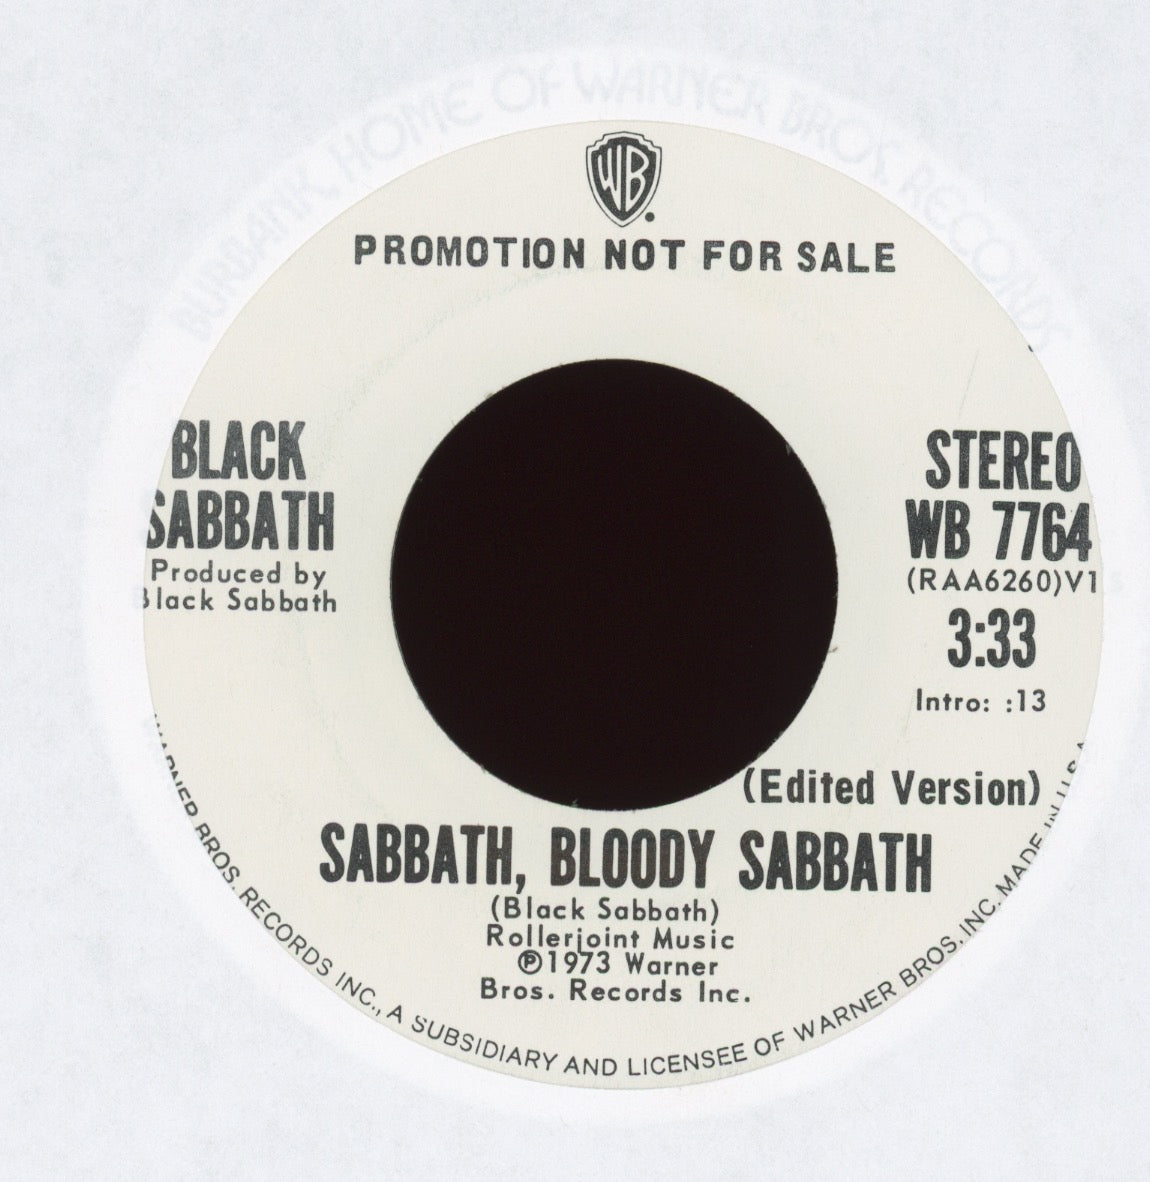 Black Sabbath - Sabbath, Bloody Sabbath on WB Promo Rock 45